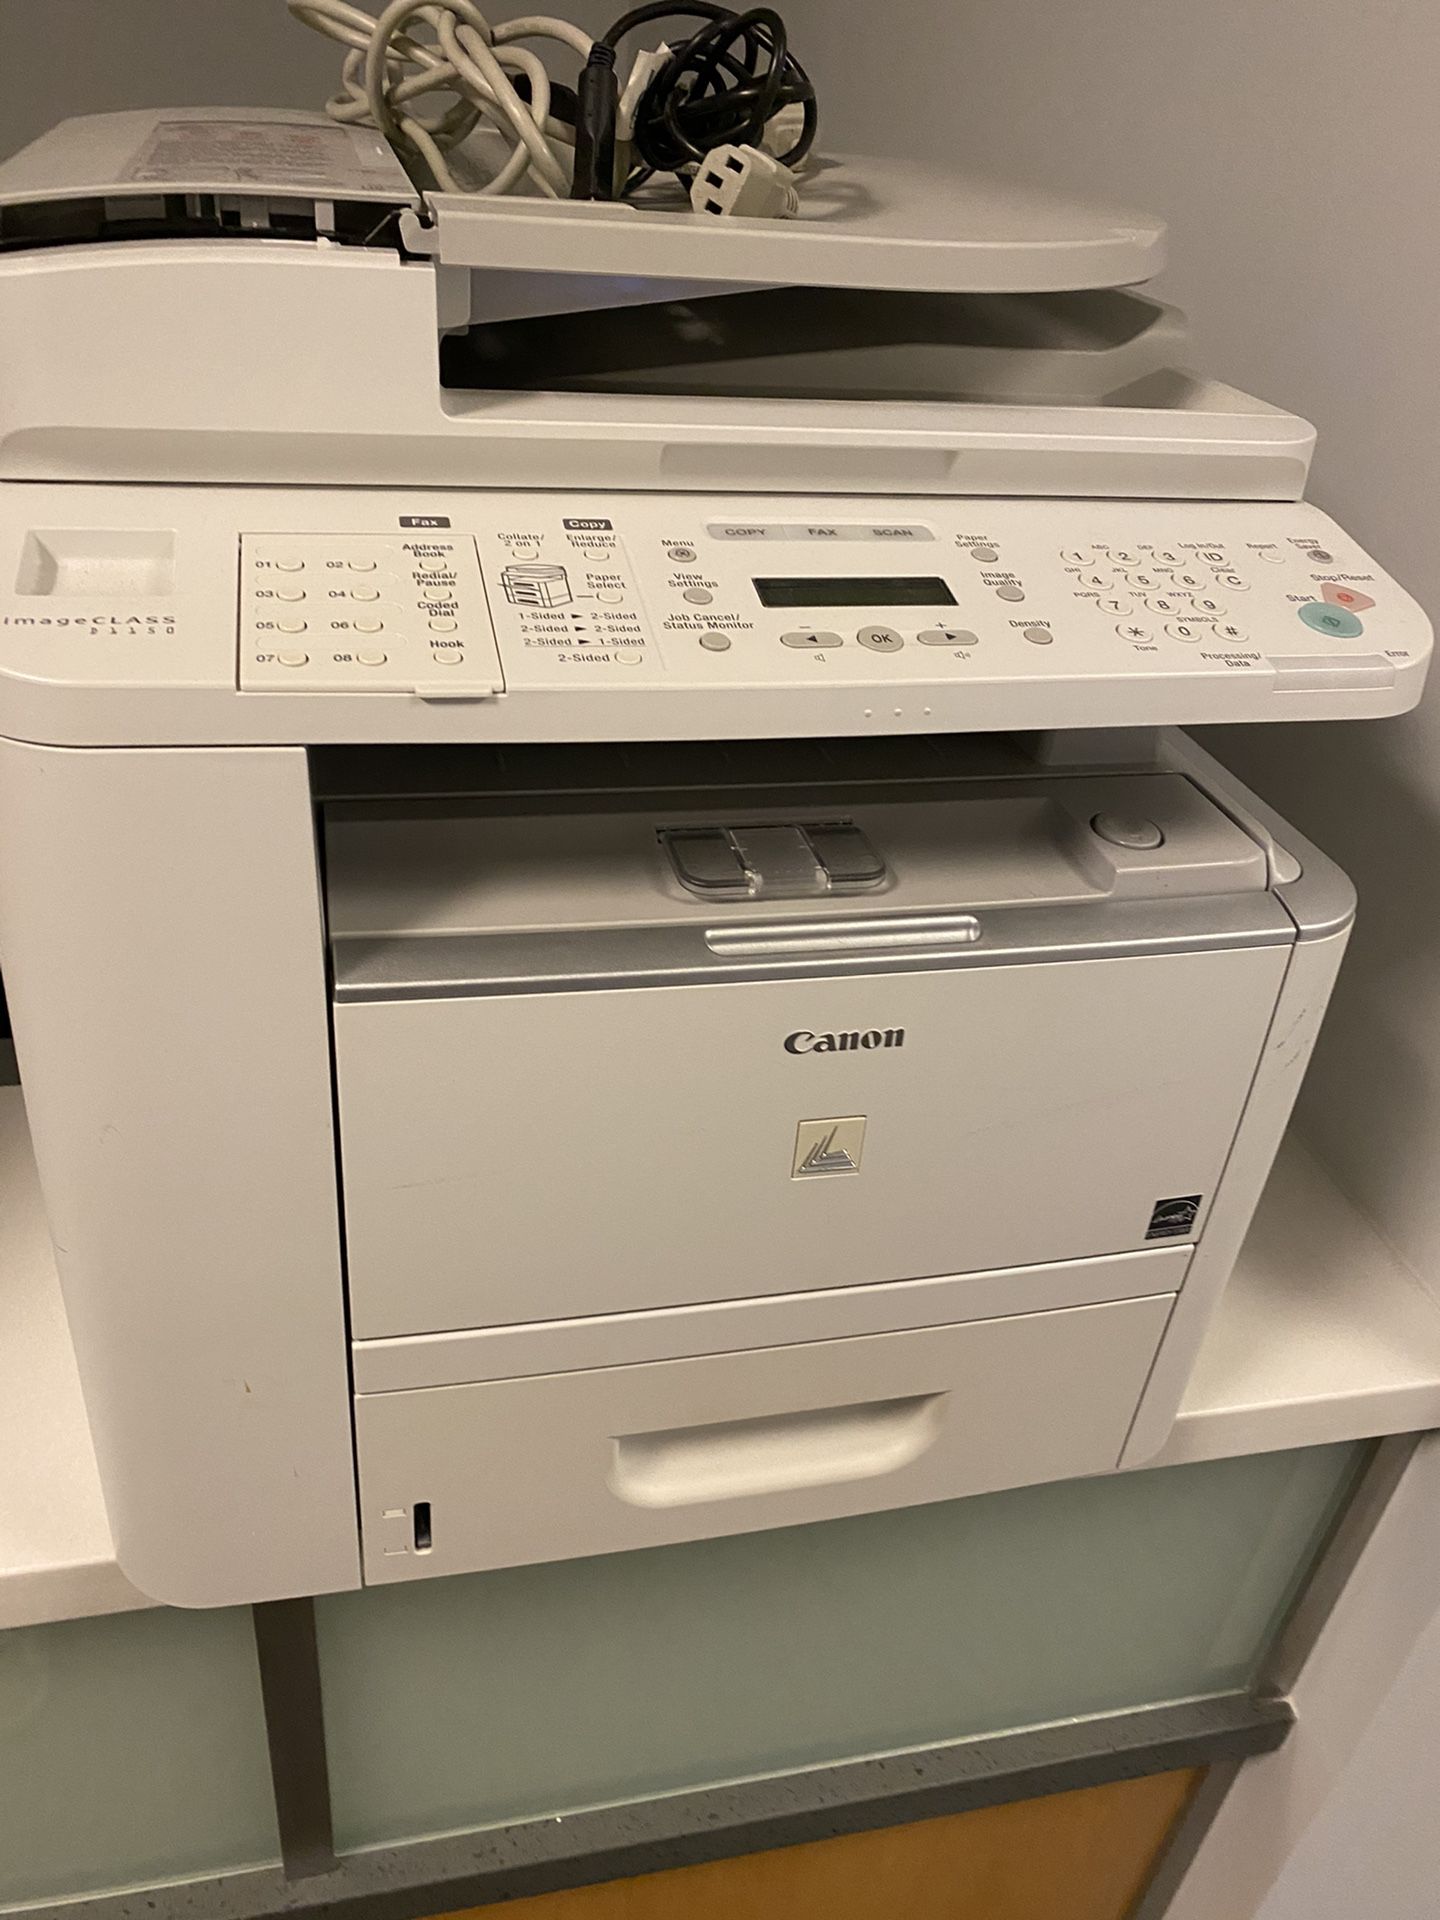 Cannon D1550 Printer Copy Fax Scanner Commercial